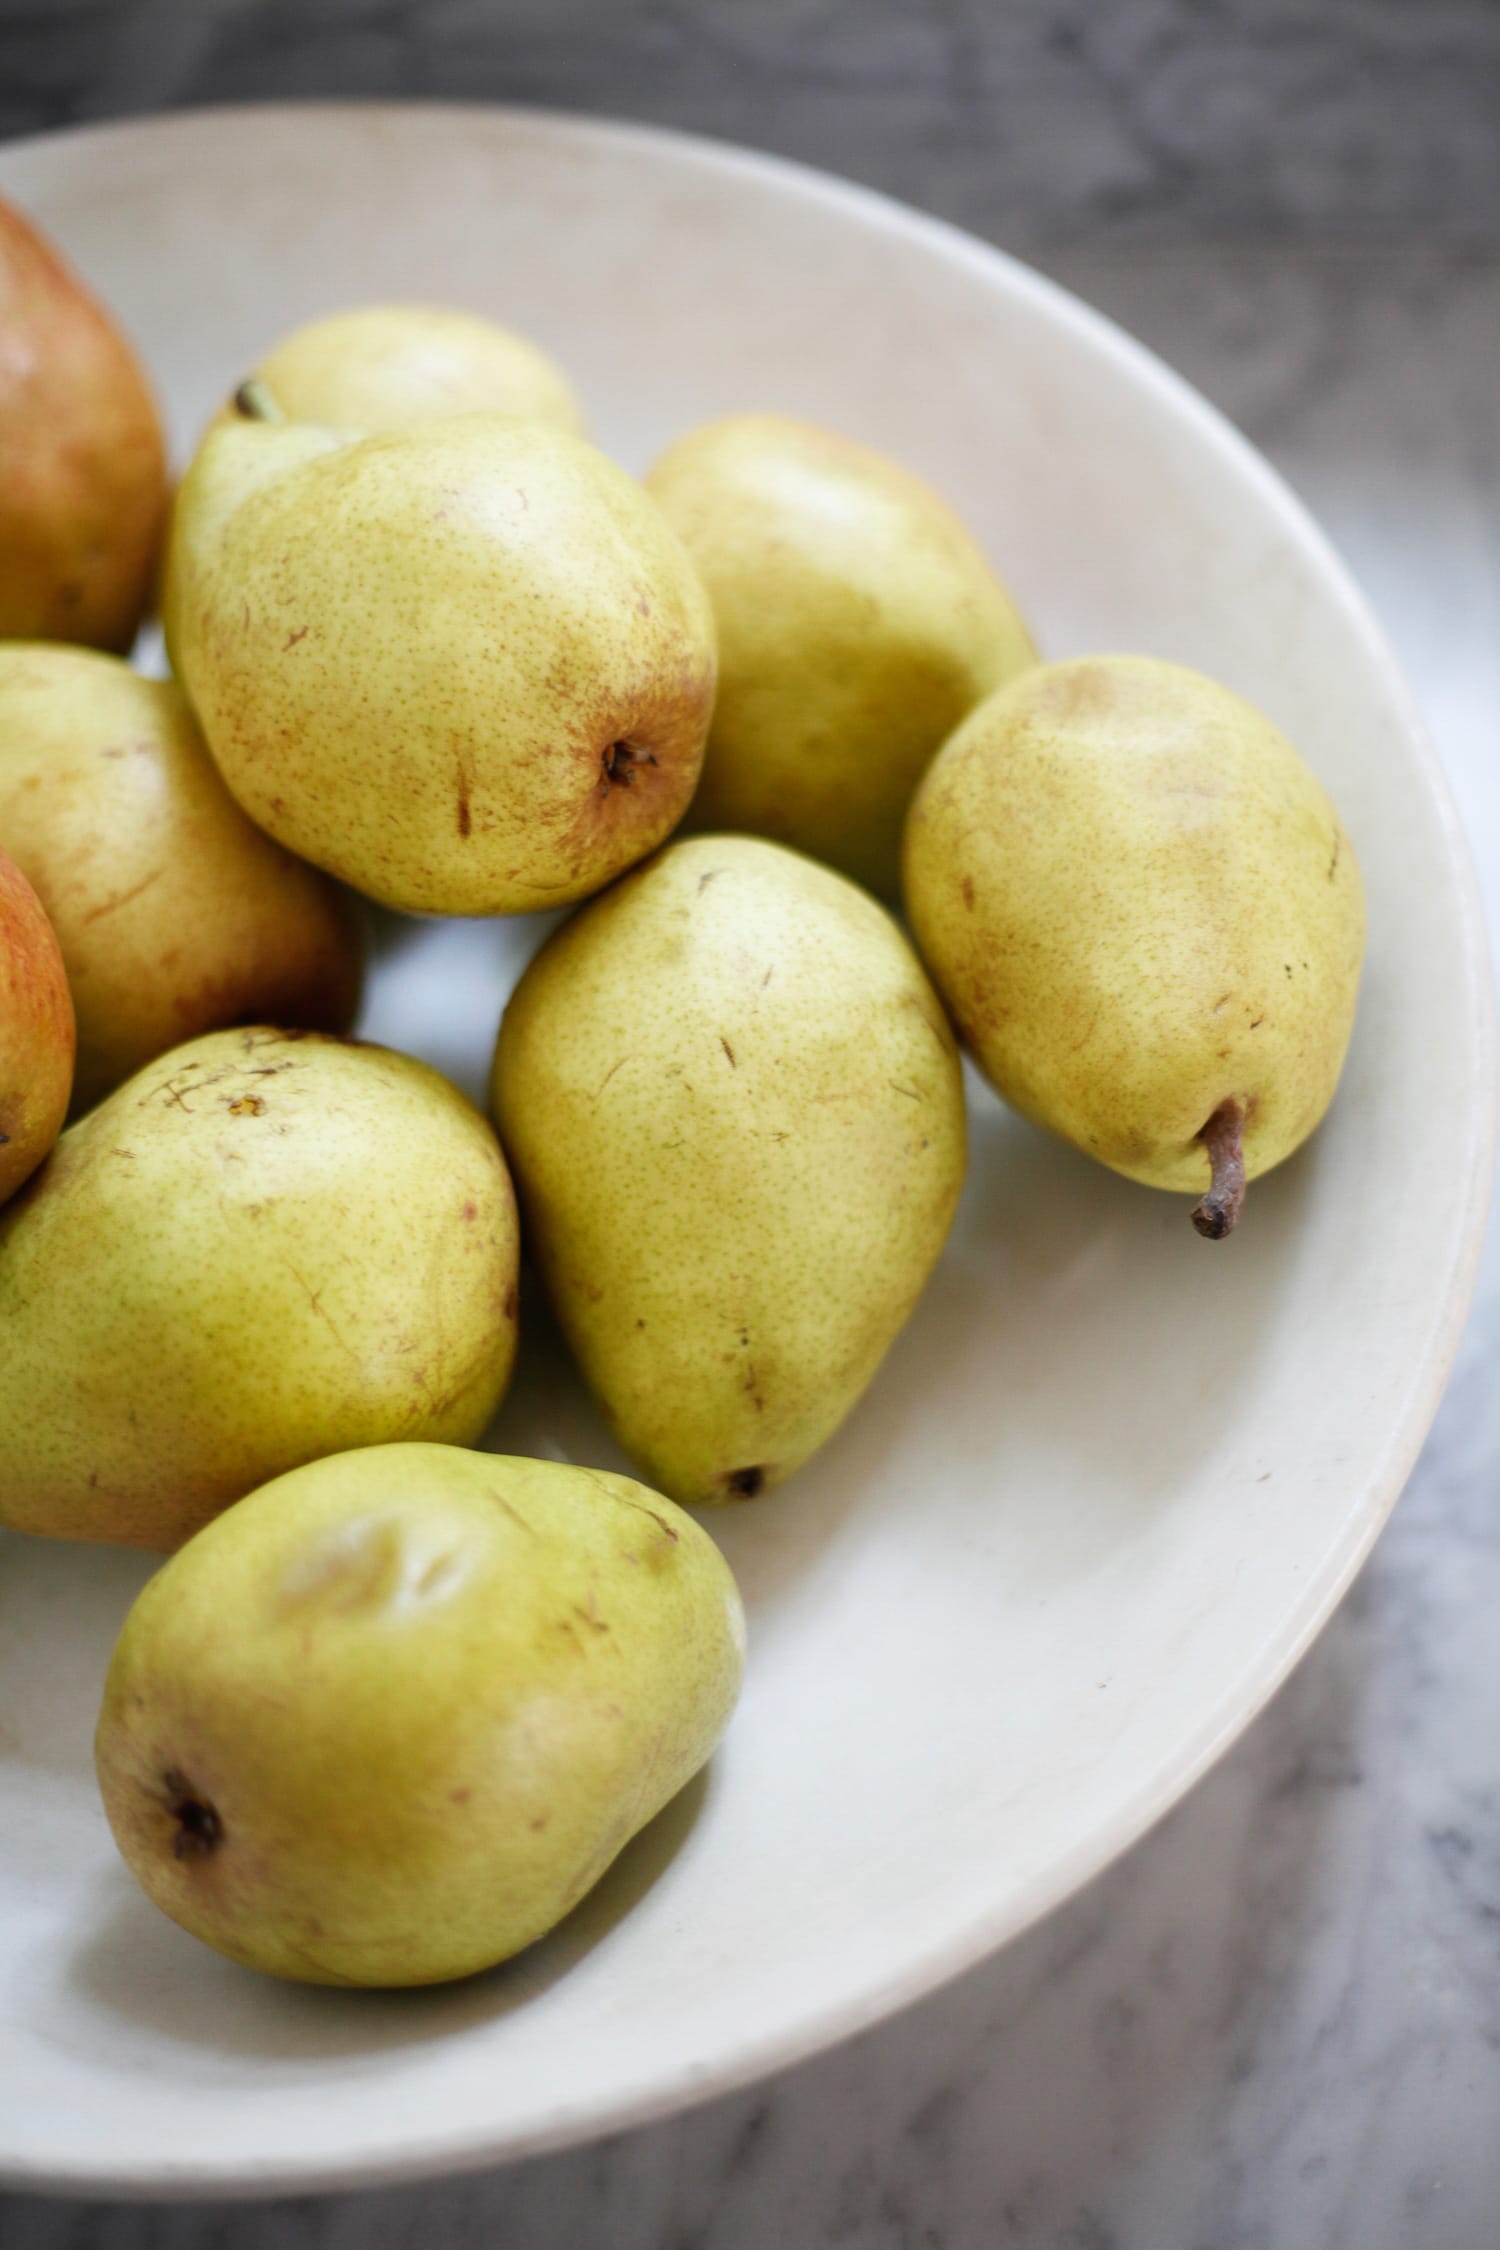 Pears in bowl